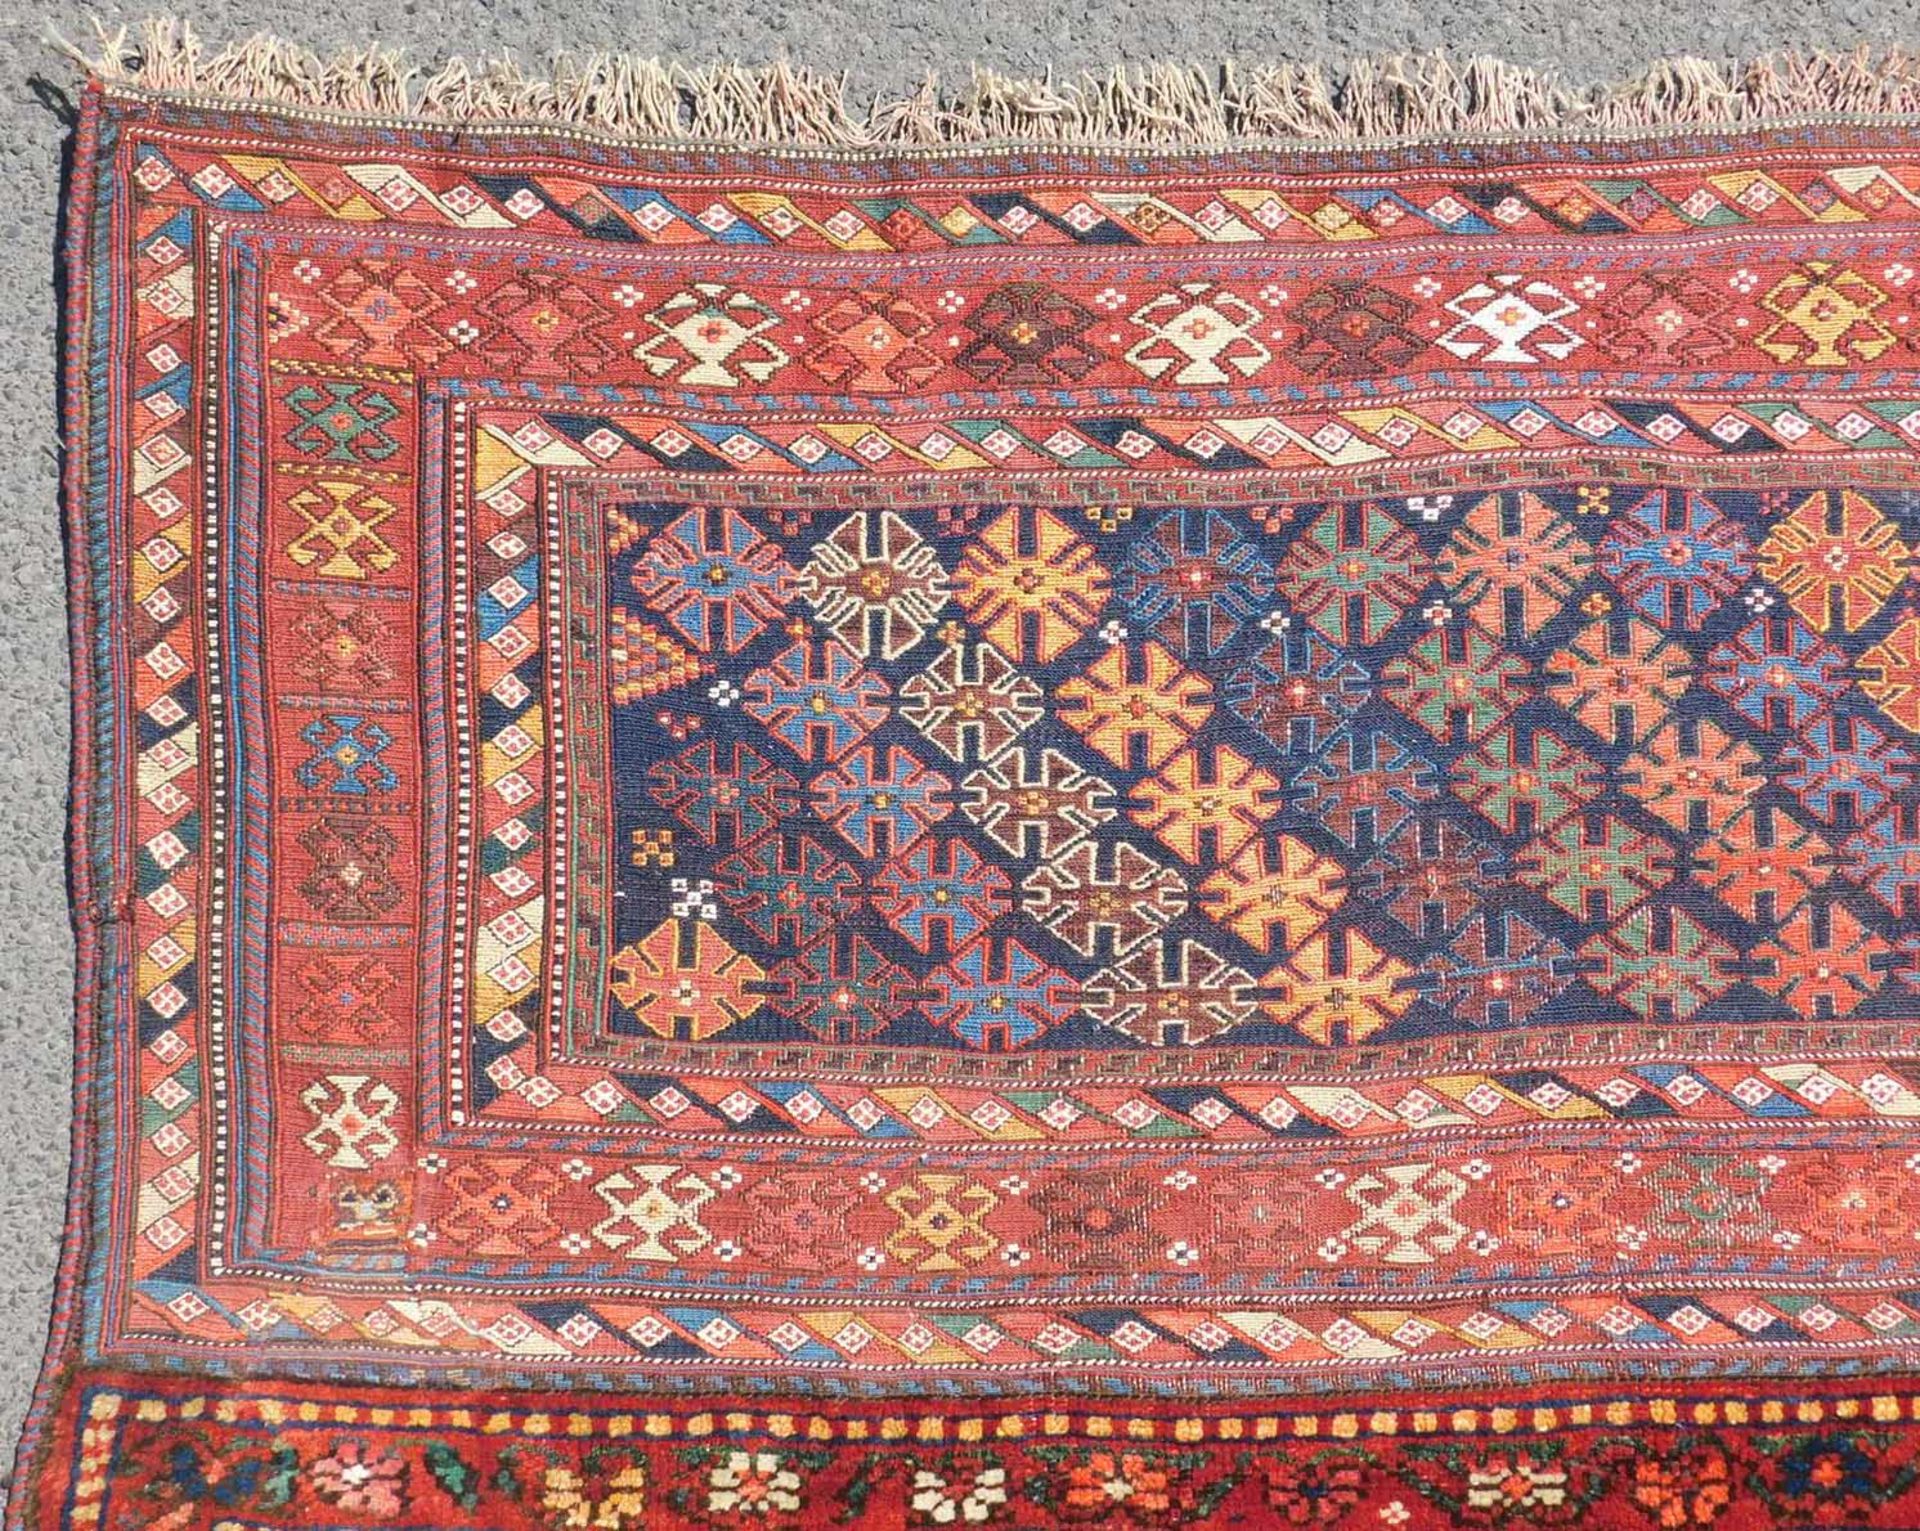 Shah - Savan Persian rug. Pocket front. Iran. Antique, around 1900.94 cm x 132 cm. One side hand- - Image 4 of 7